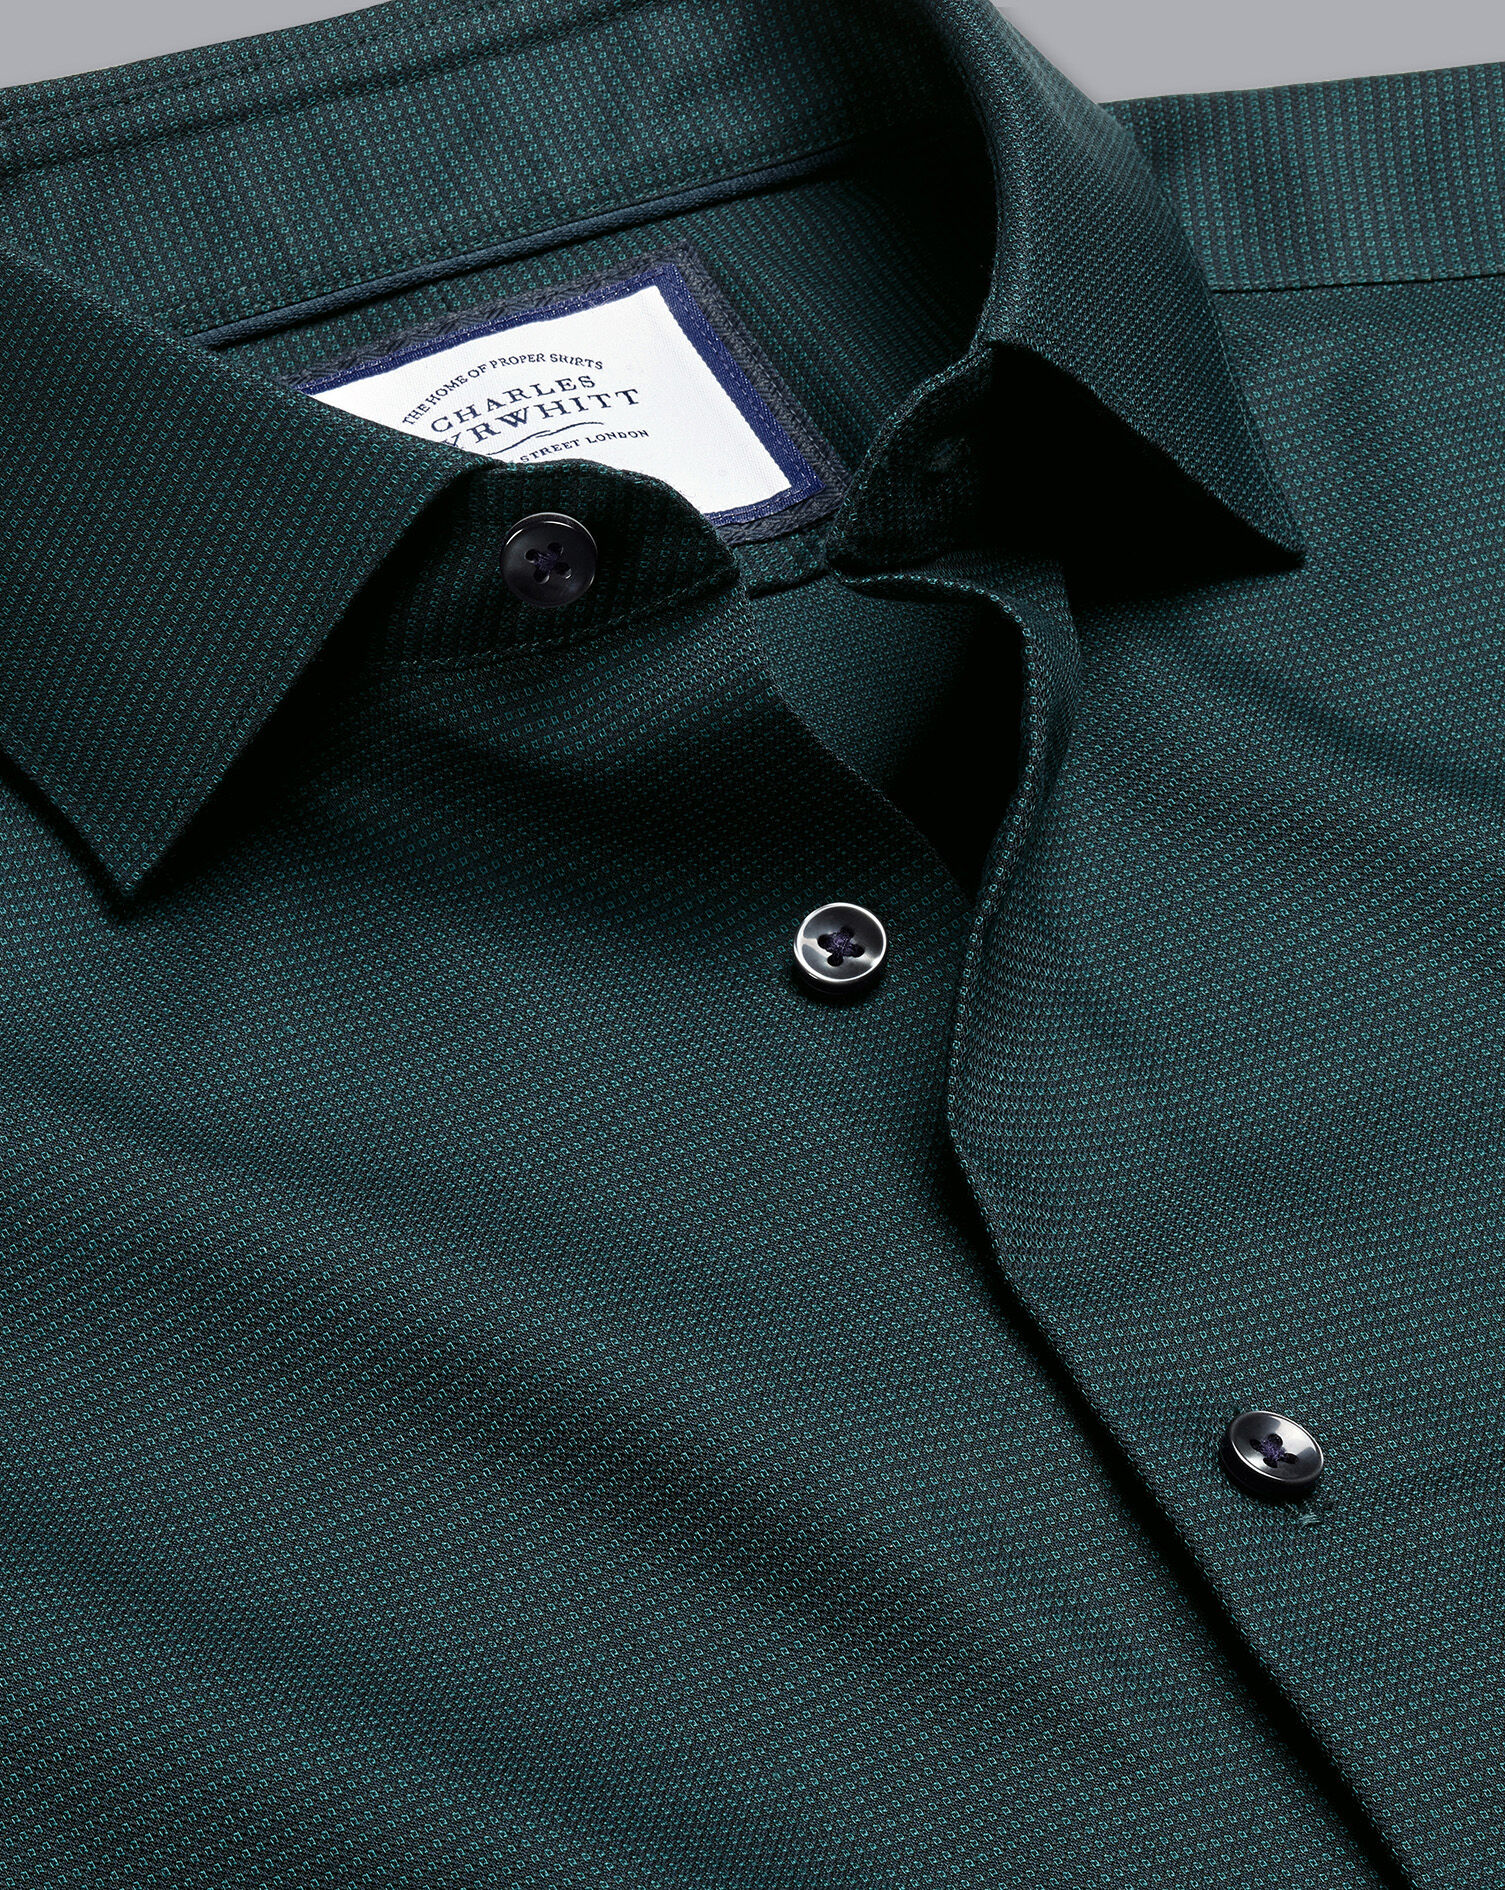 Charles Tyrwhitt Charles Tyrwhitt non-iron slim fit blue stripe green shirt 16 inch smart work 